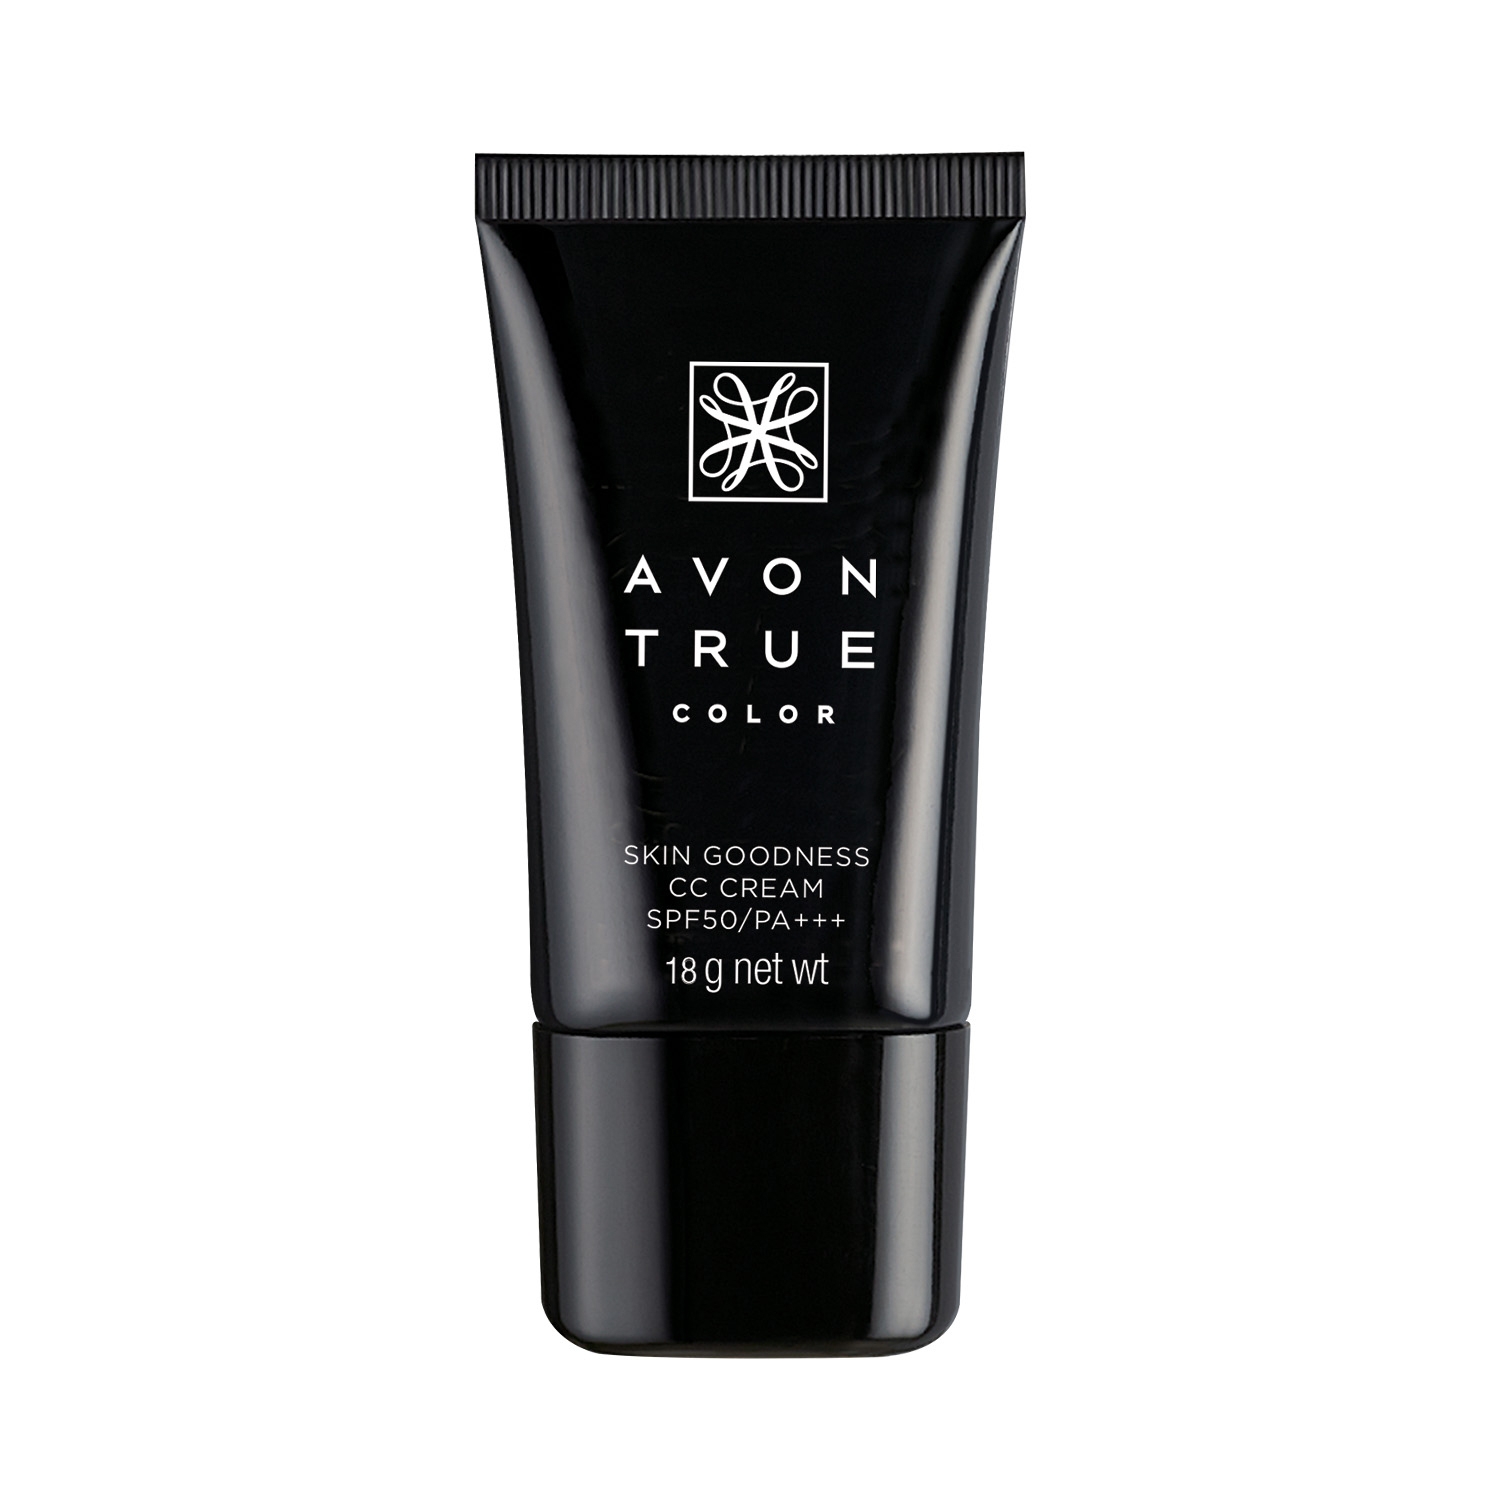 Avon | Avon True Color Skin Goodness CC Cream SPF 50 - Nude (18g)